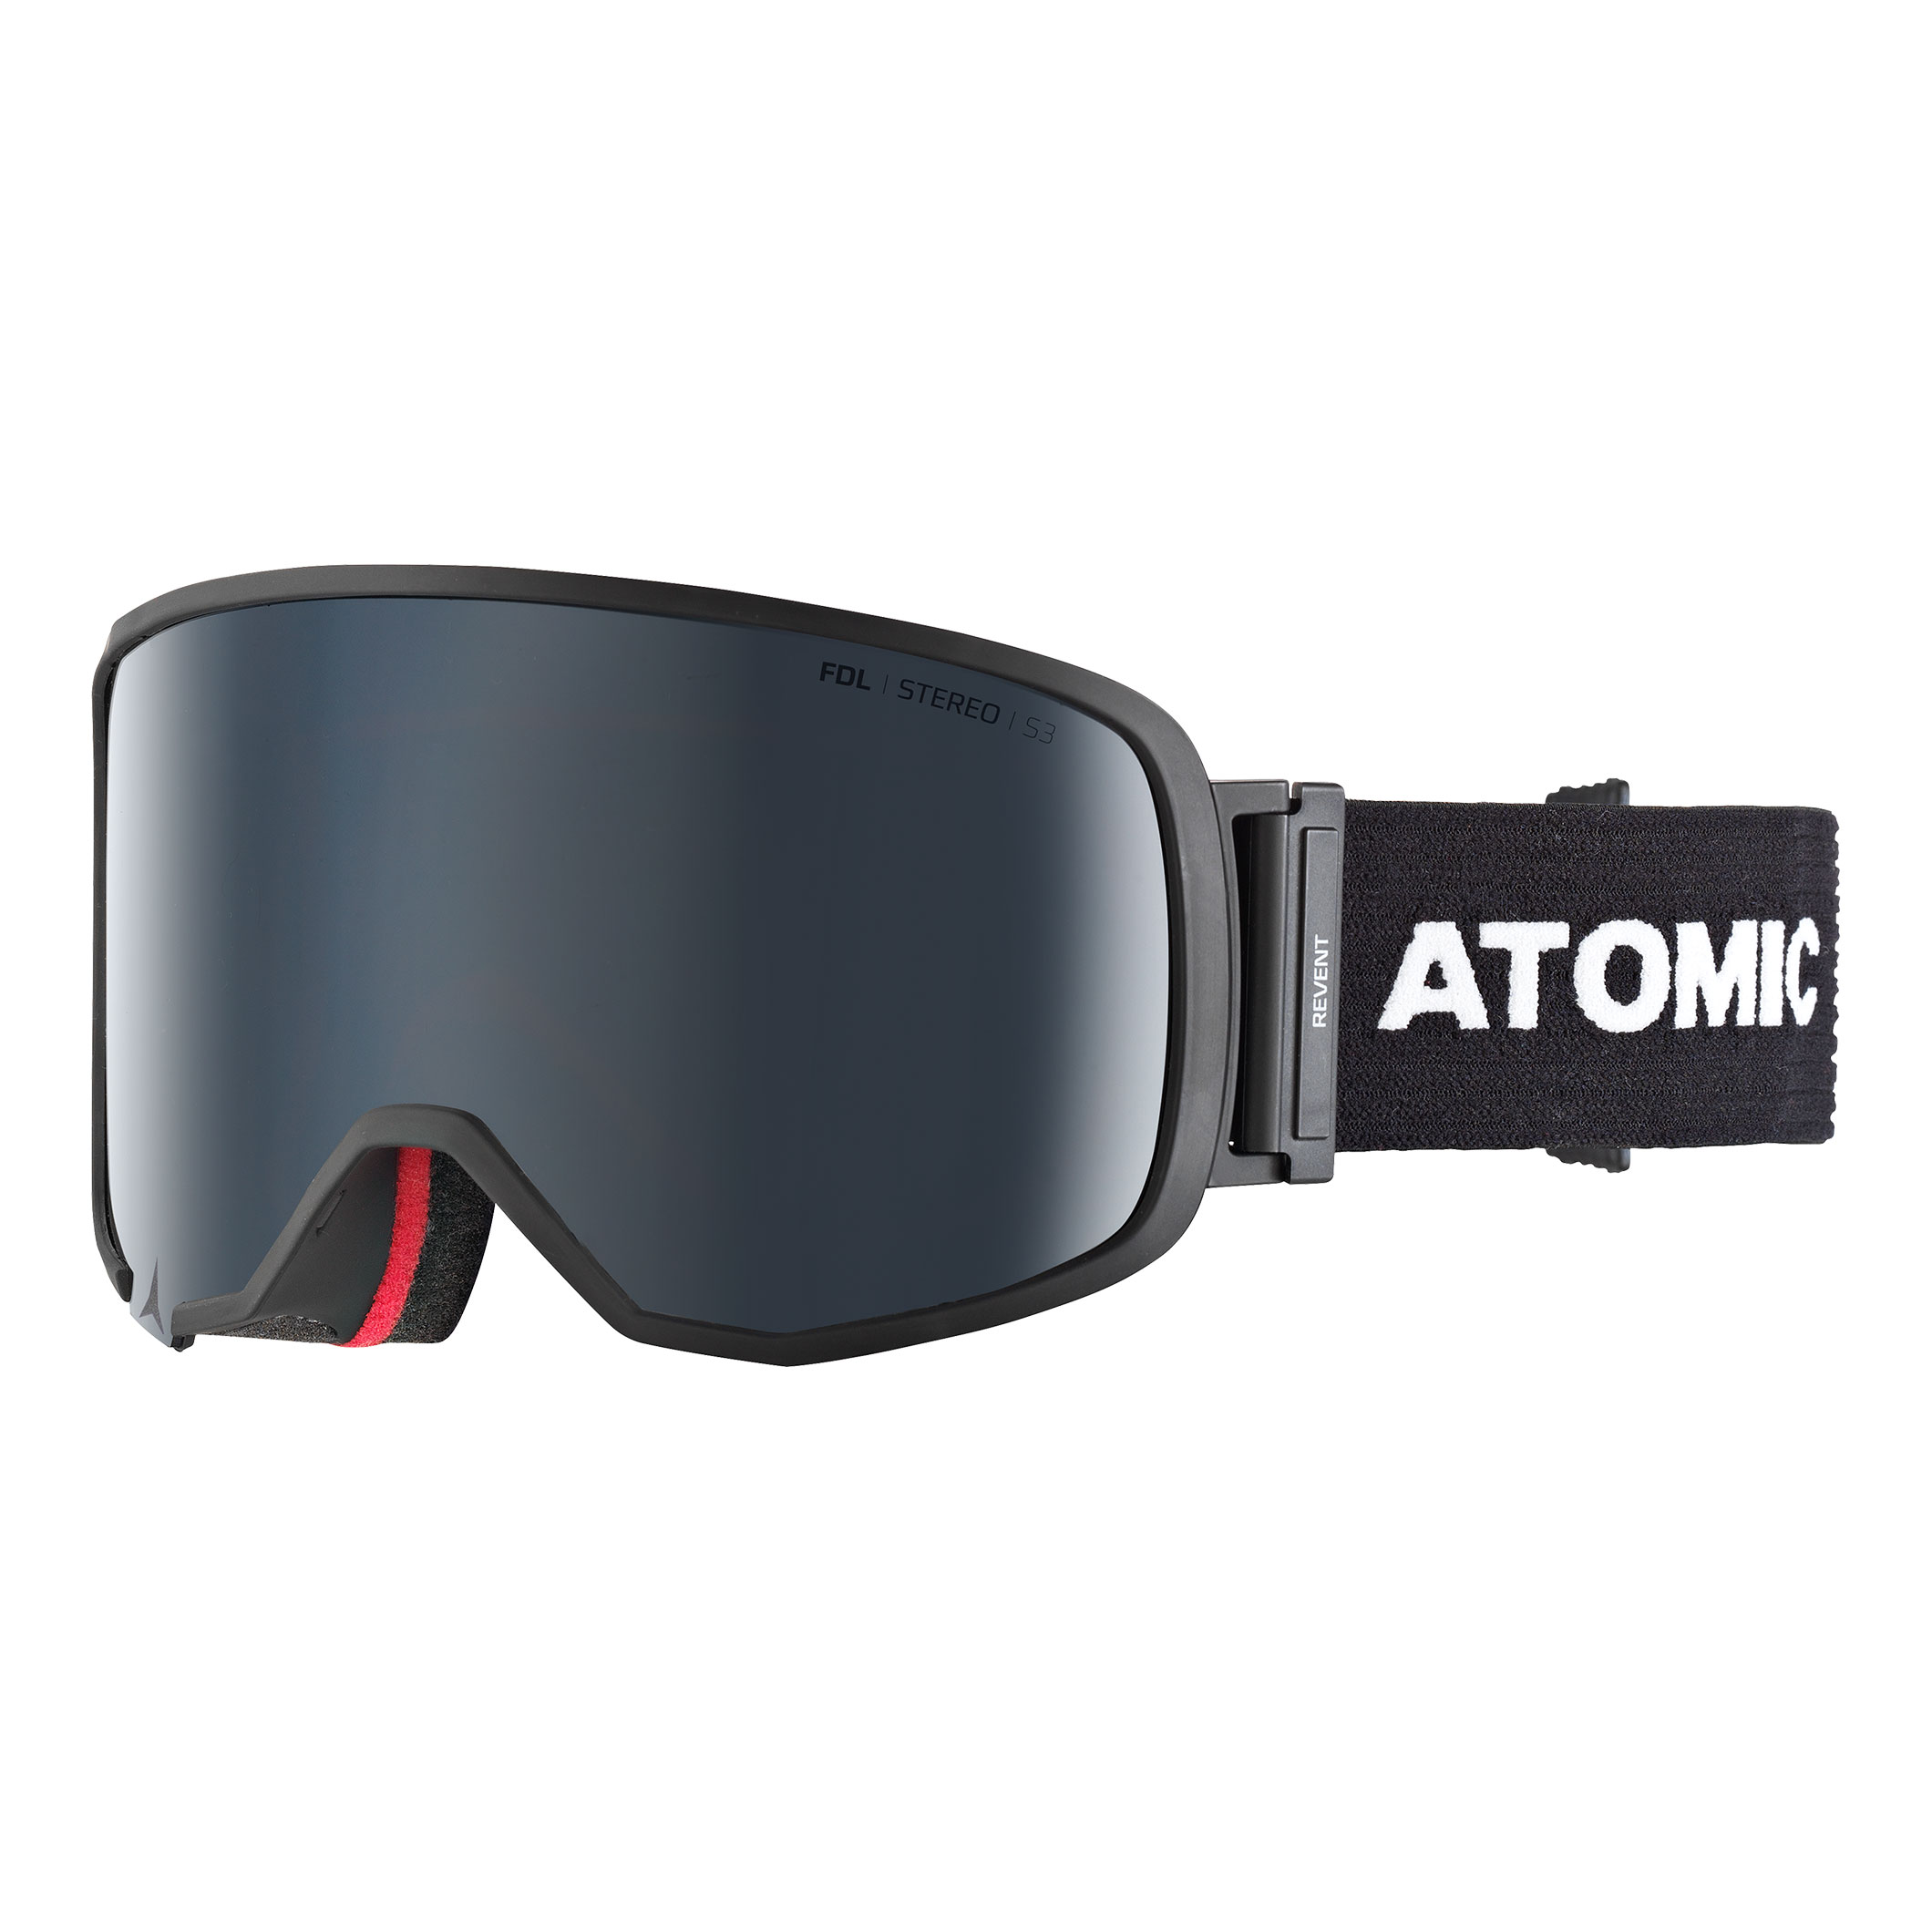  Snowboard Goggles	 -  atomic REVENT L FDL STEREO